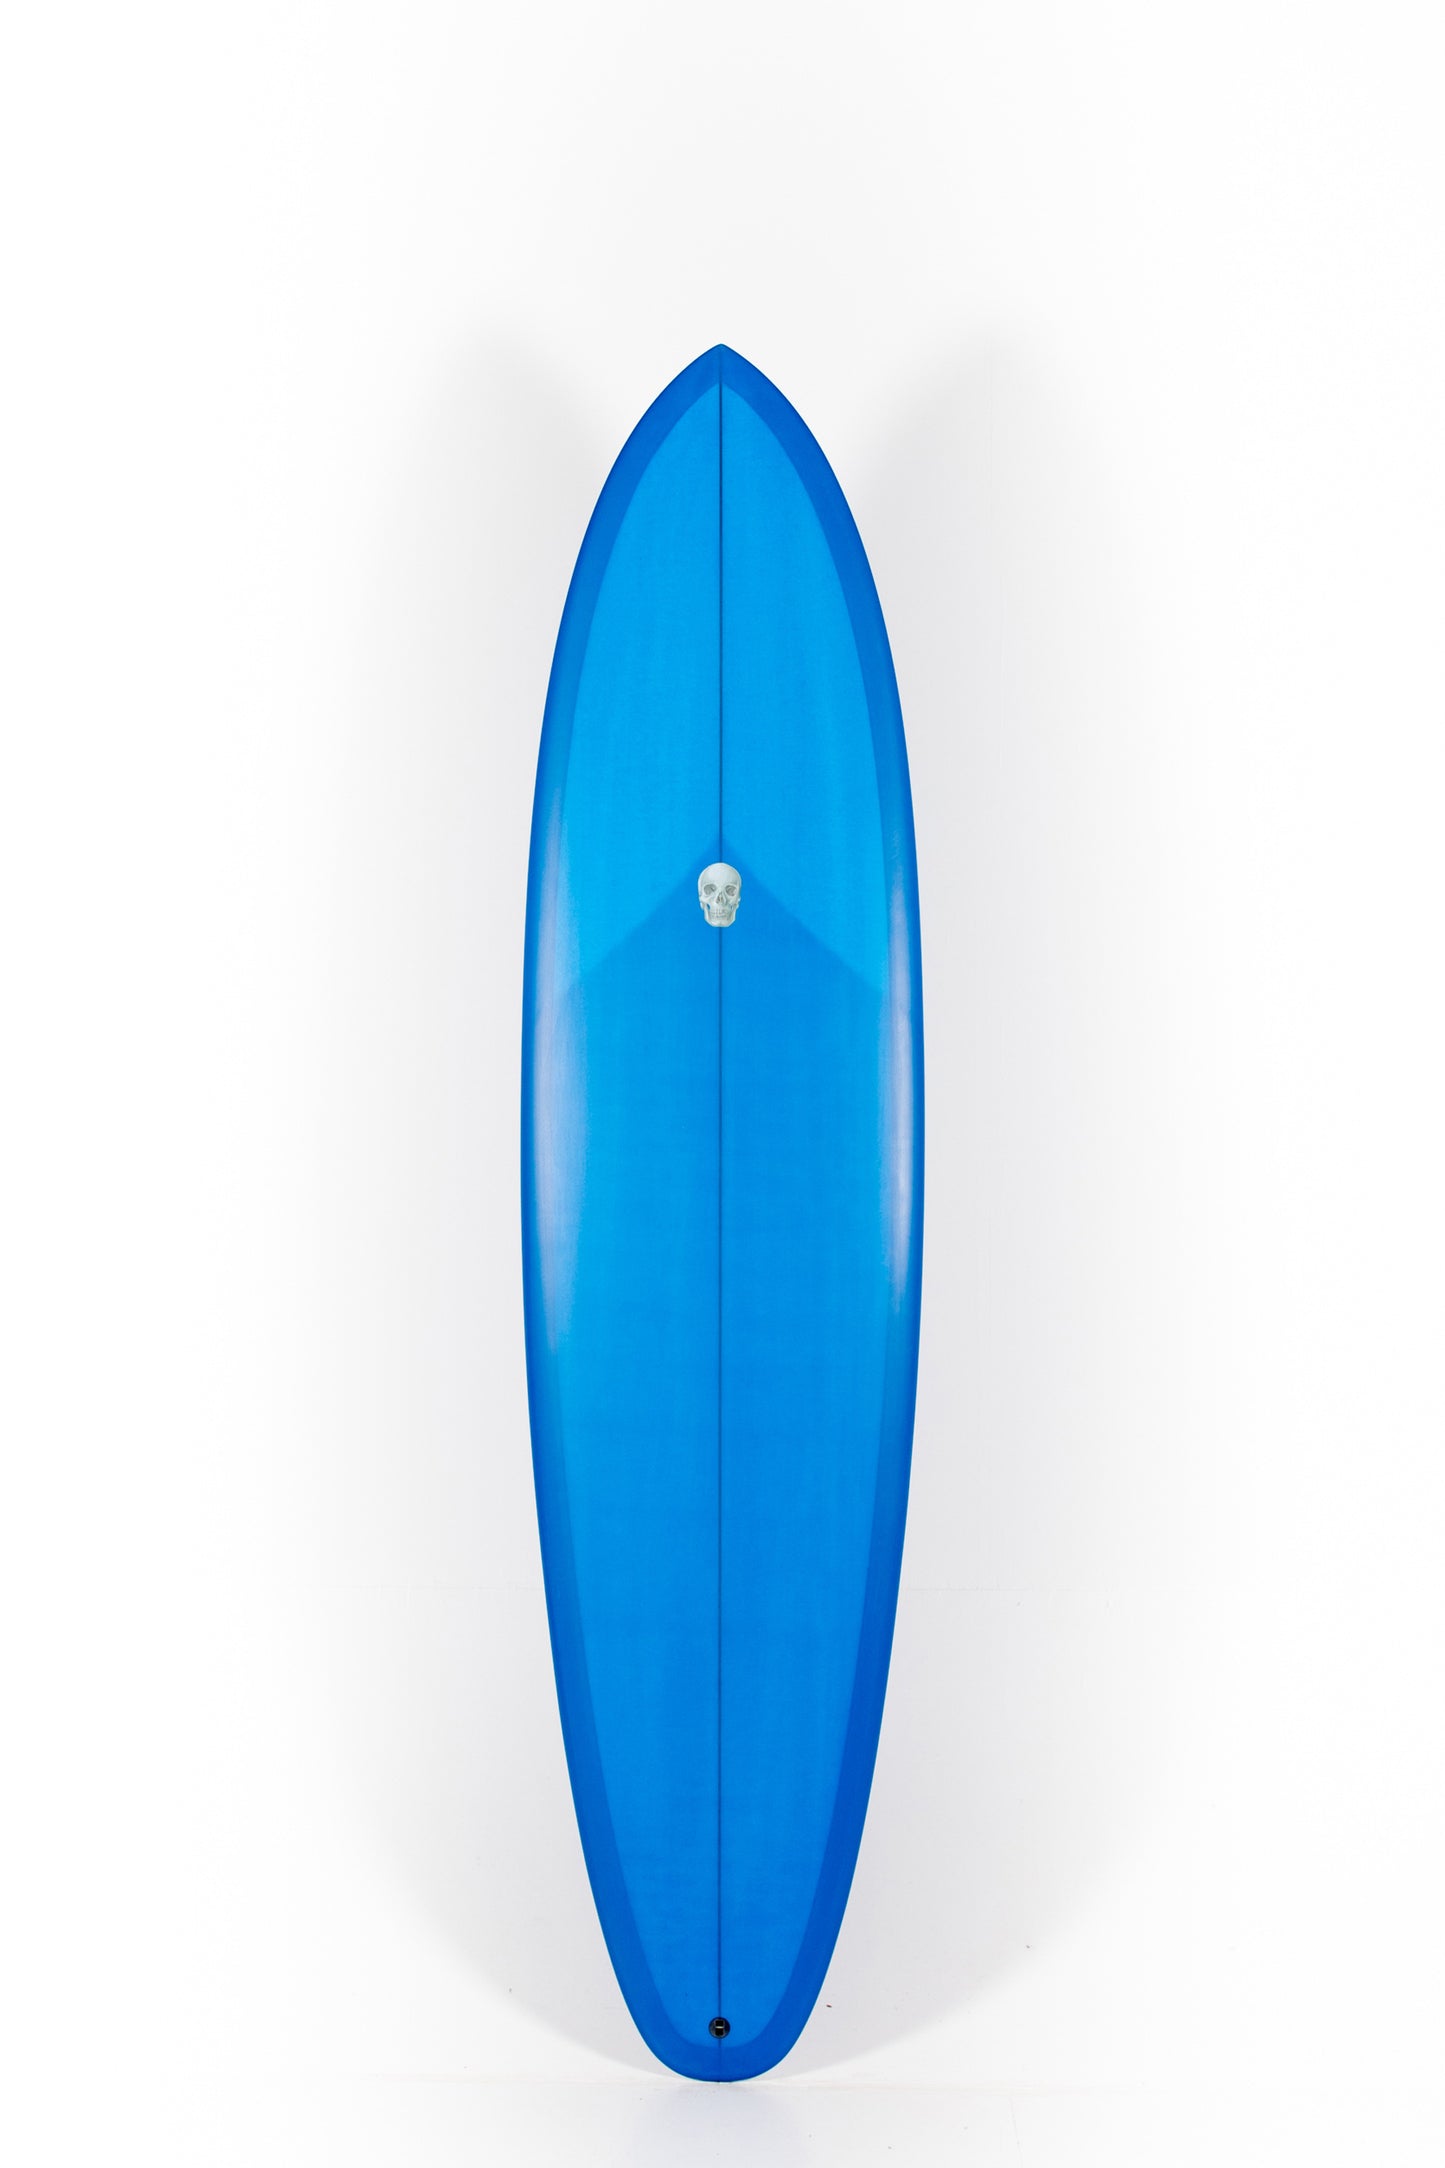 Pukas Surf shop - Christenson Surfboards - TWIN TRACKER - 7'6" x 21 1/4  x 2 7/8 - CX02891